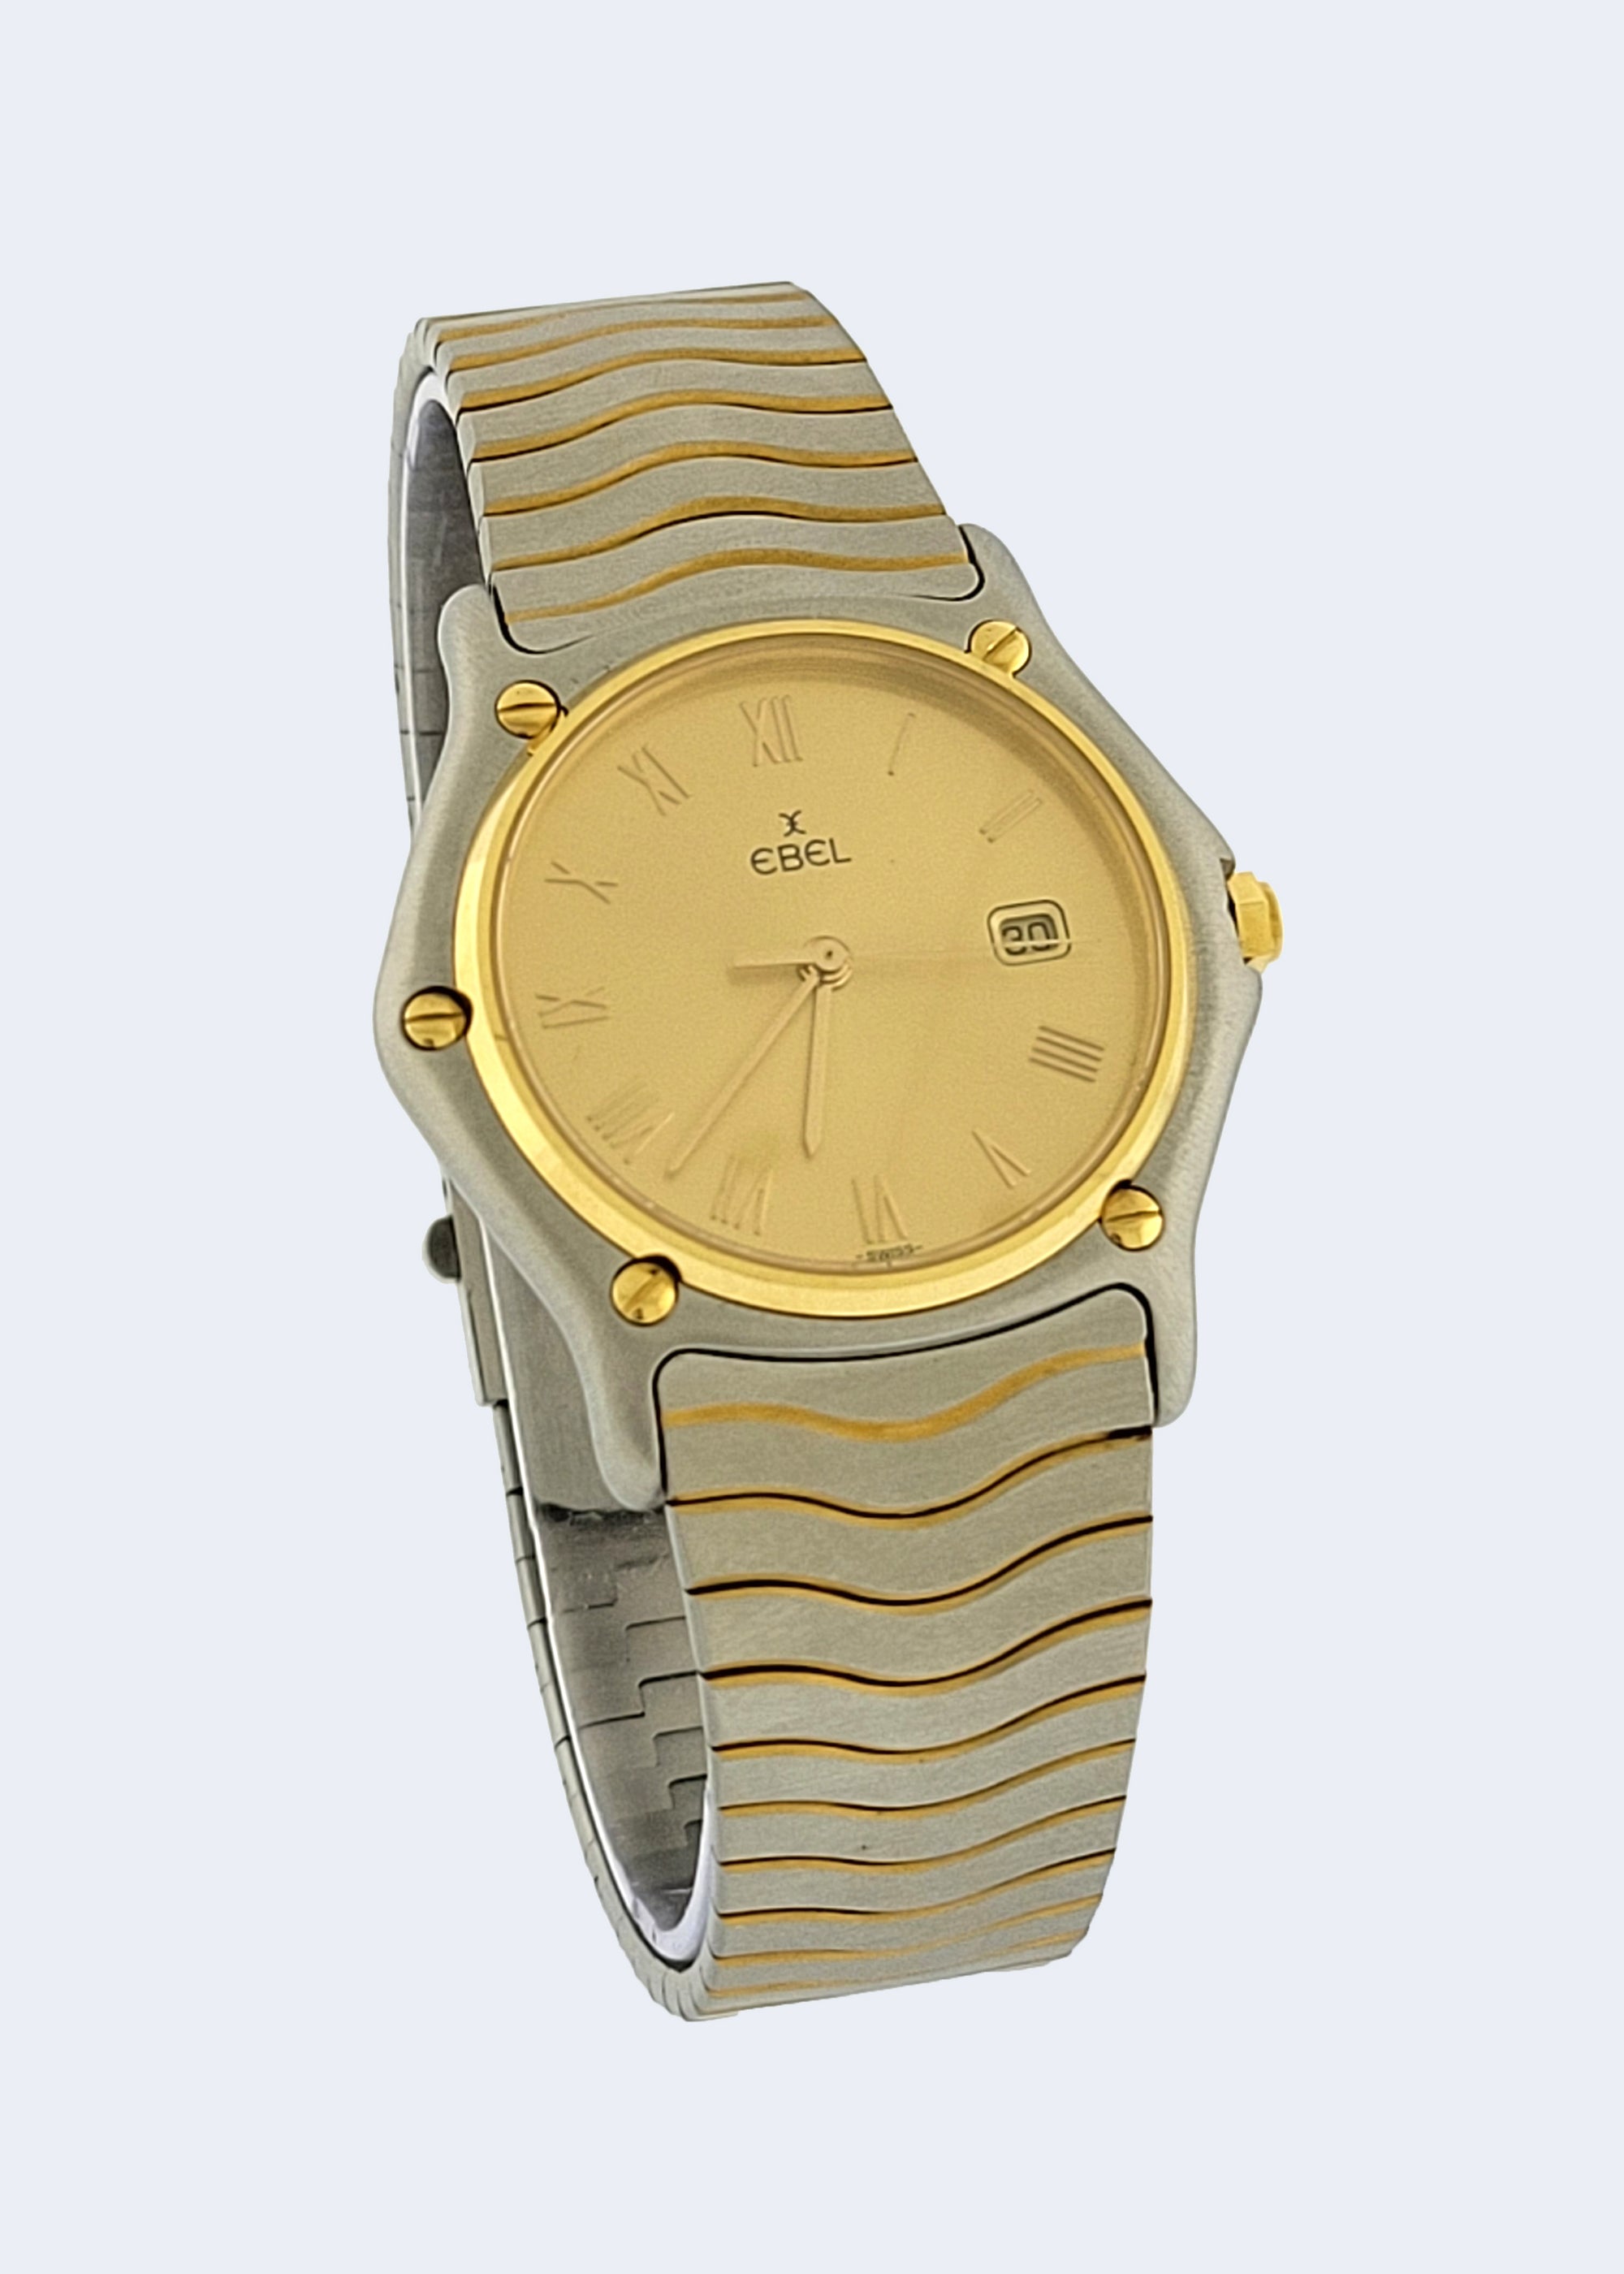 S/S Ebel Sport Wave Classic Watch Ref 183909 Circa 1990's